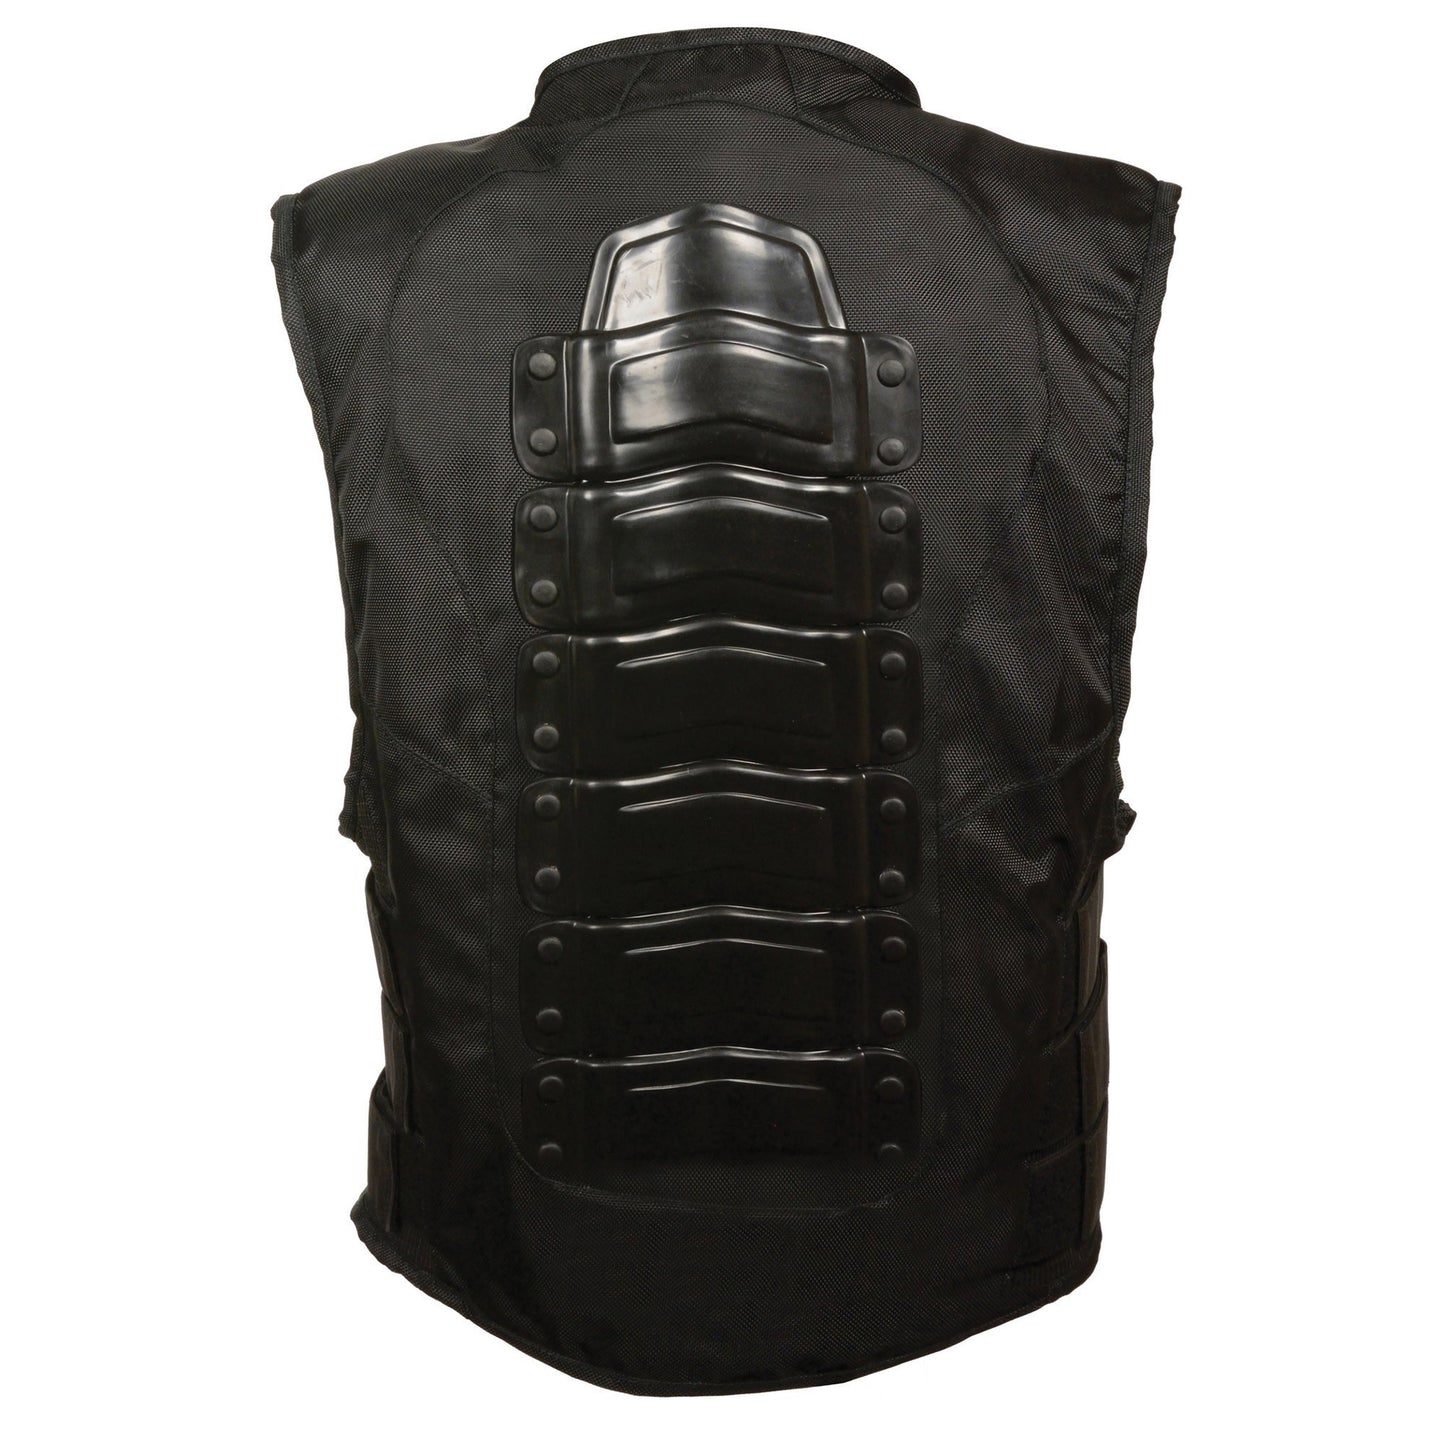 Milwaukee Leather SH1458 Men's Black Textile SWAT Style Biker Vest with Armor